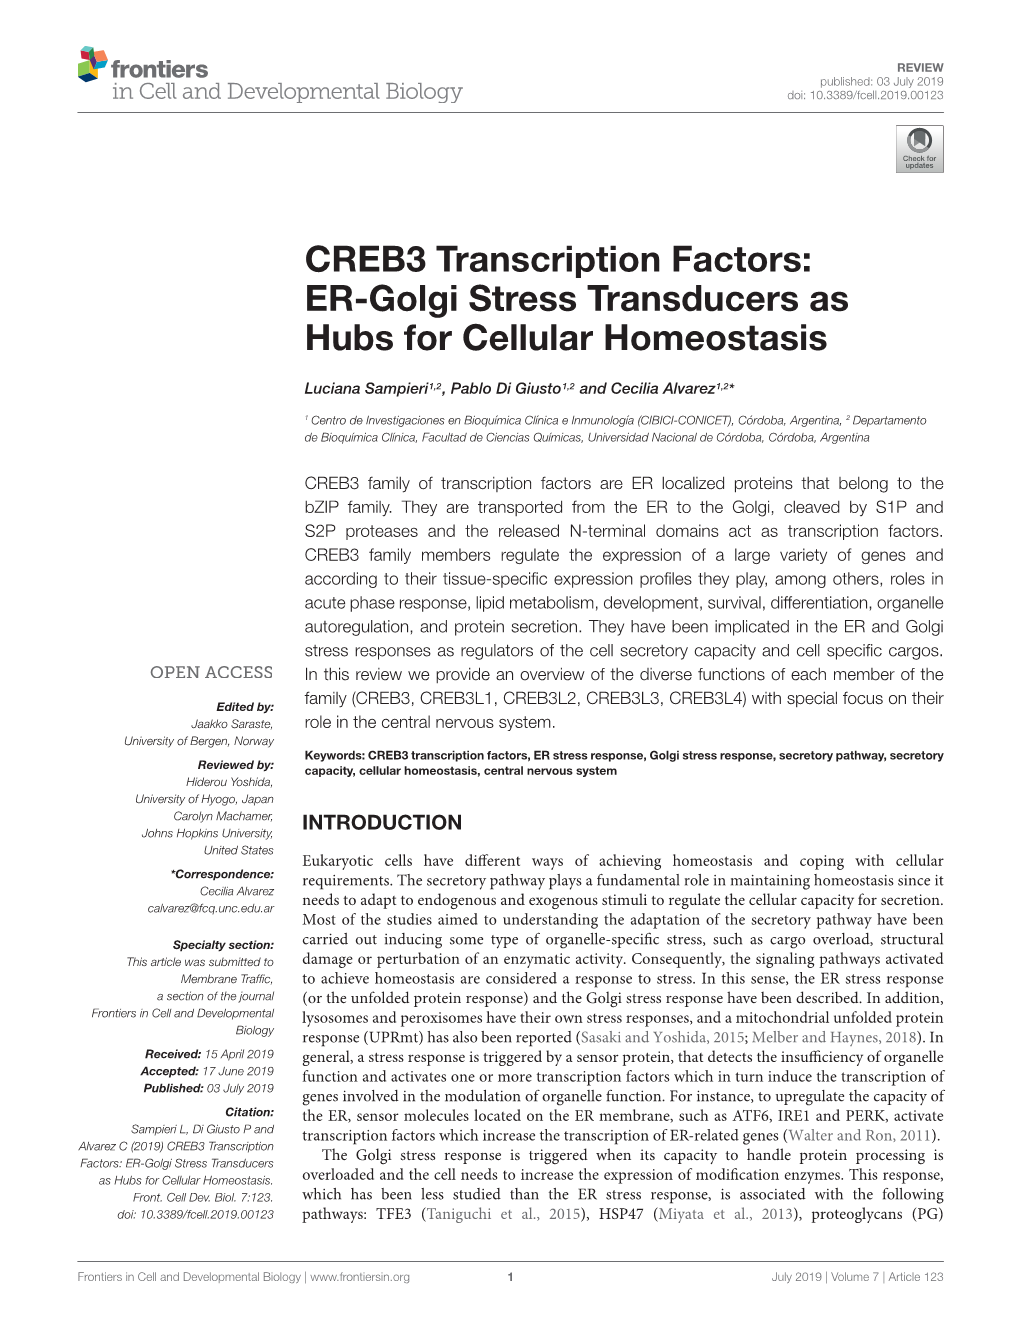 CREB3 Transcription Factors: ER-Golgi Stress Transducers As Hubs for Cellular Homeostasis